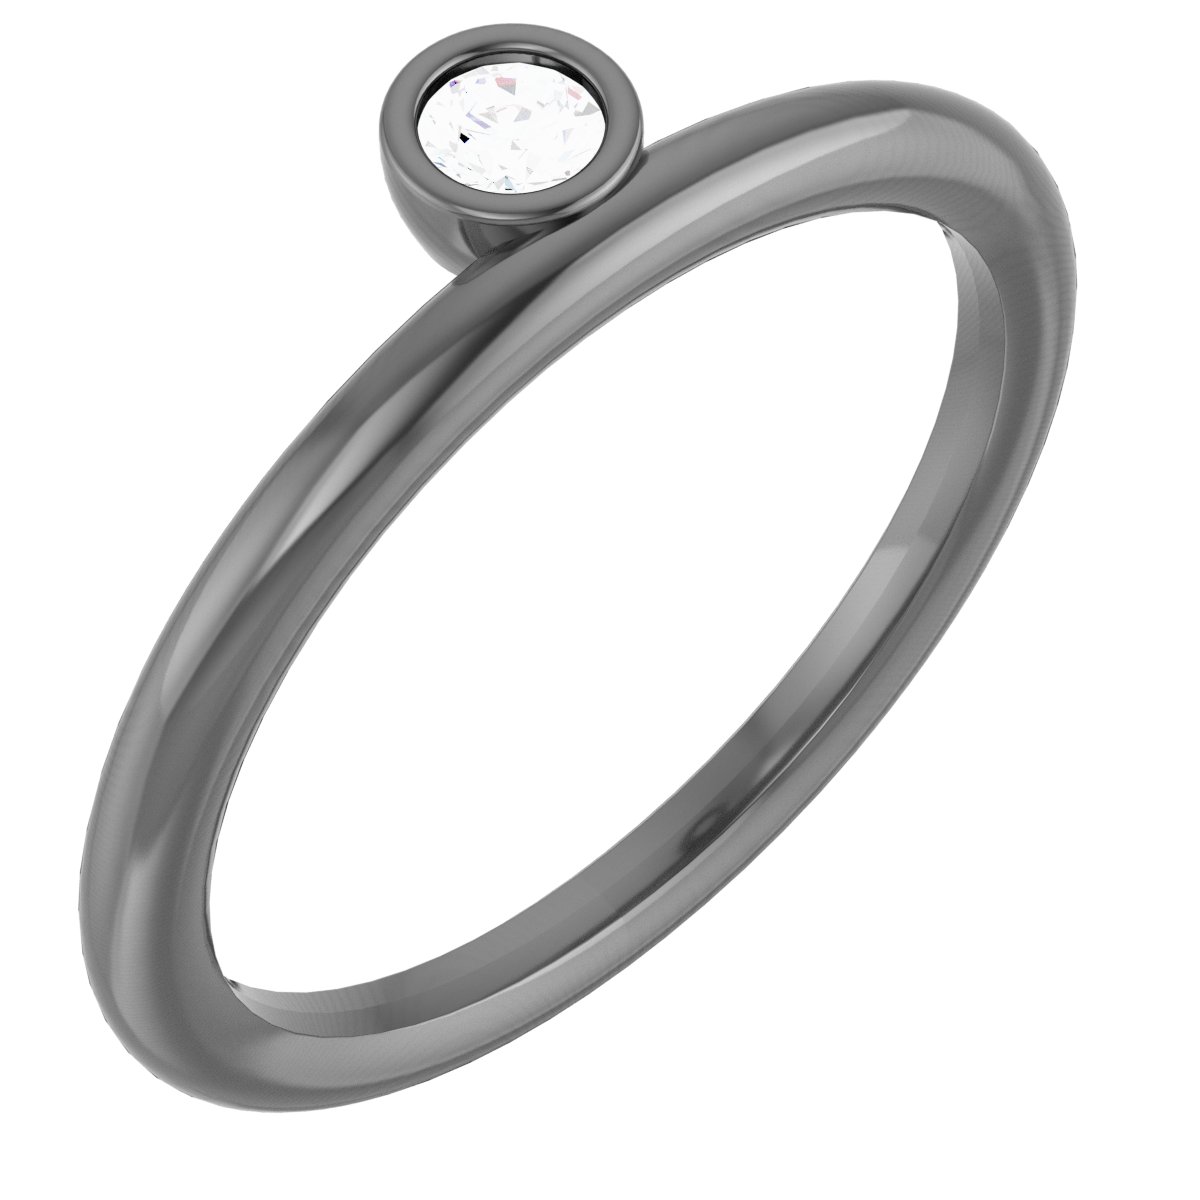 Platinum .10 CT Diamond Asymmetrical Stackable Ring Ref. 13021459